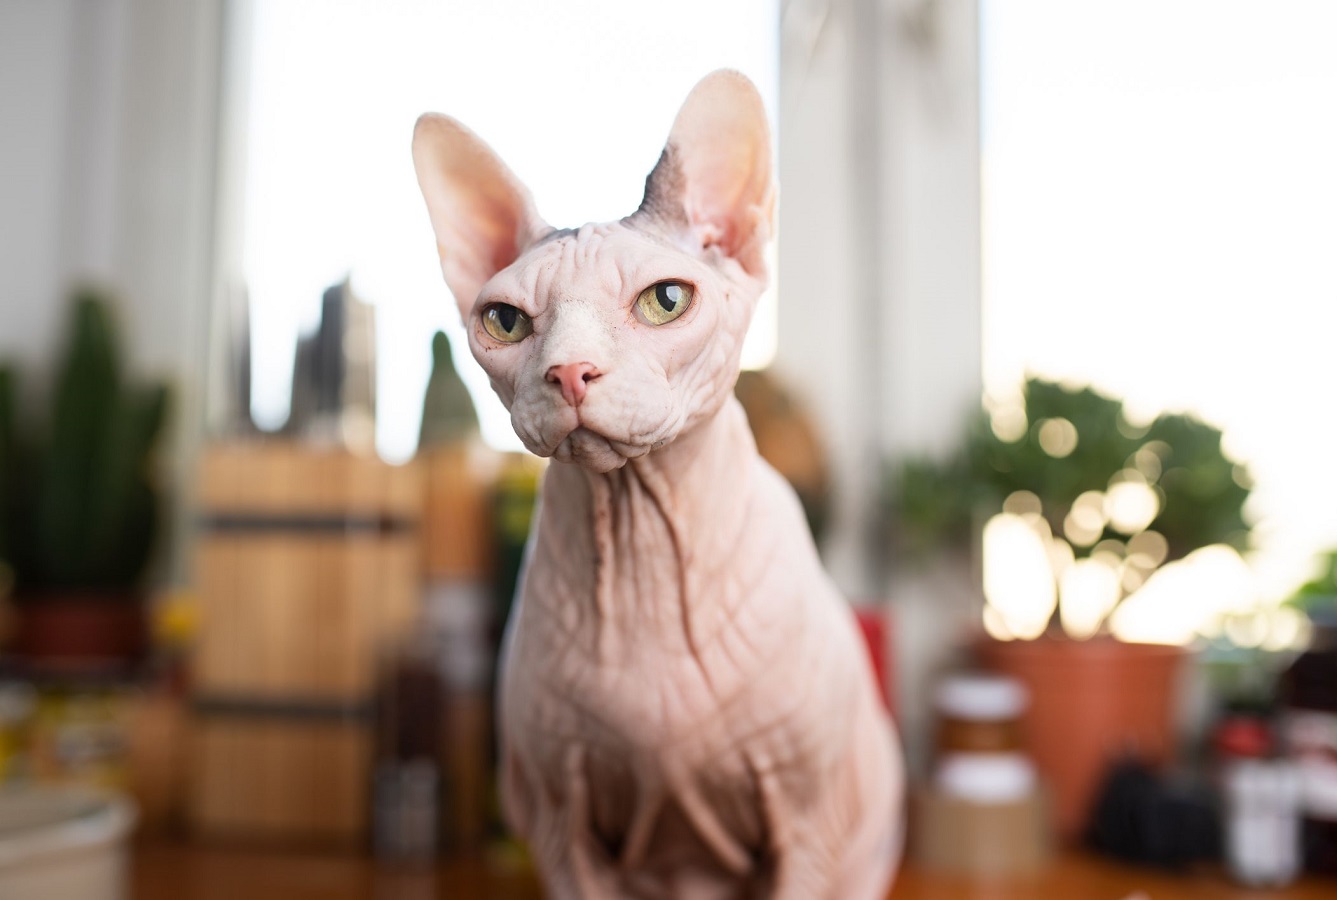 Extraordinary Bald Cats - 5 Popular Hairless Cat Breeds